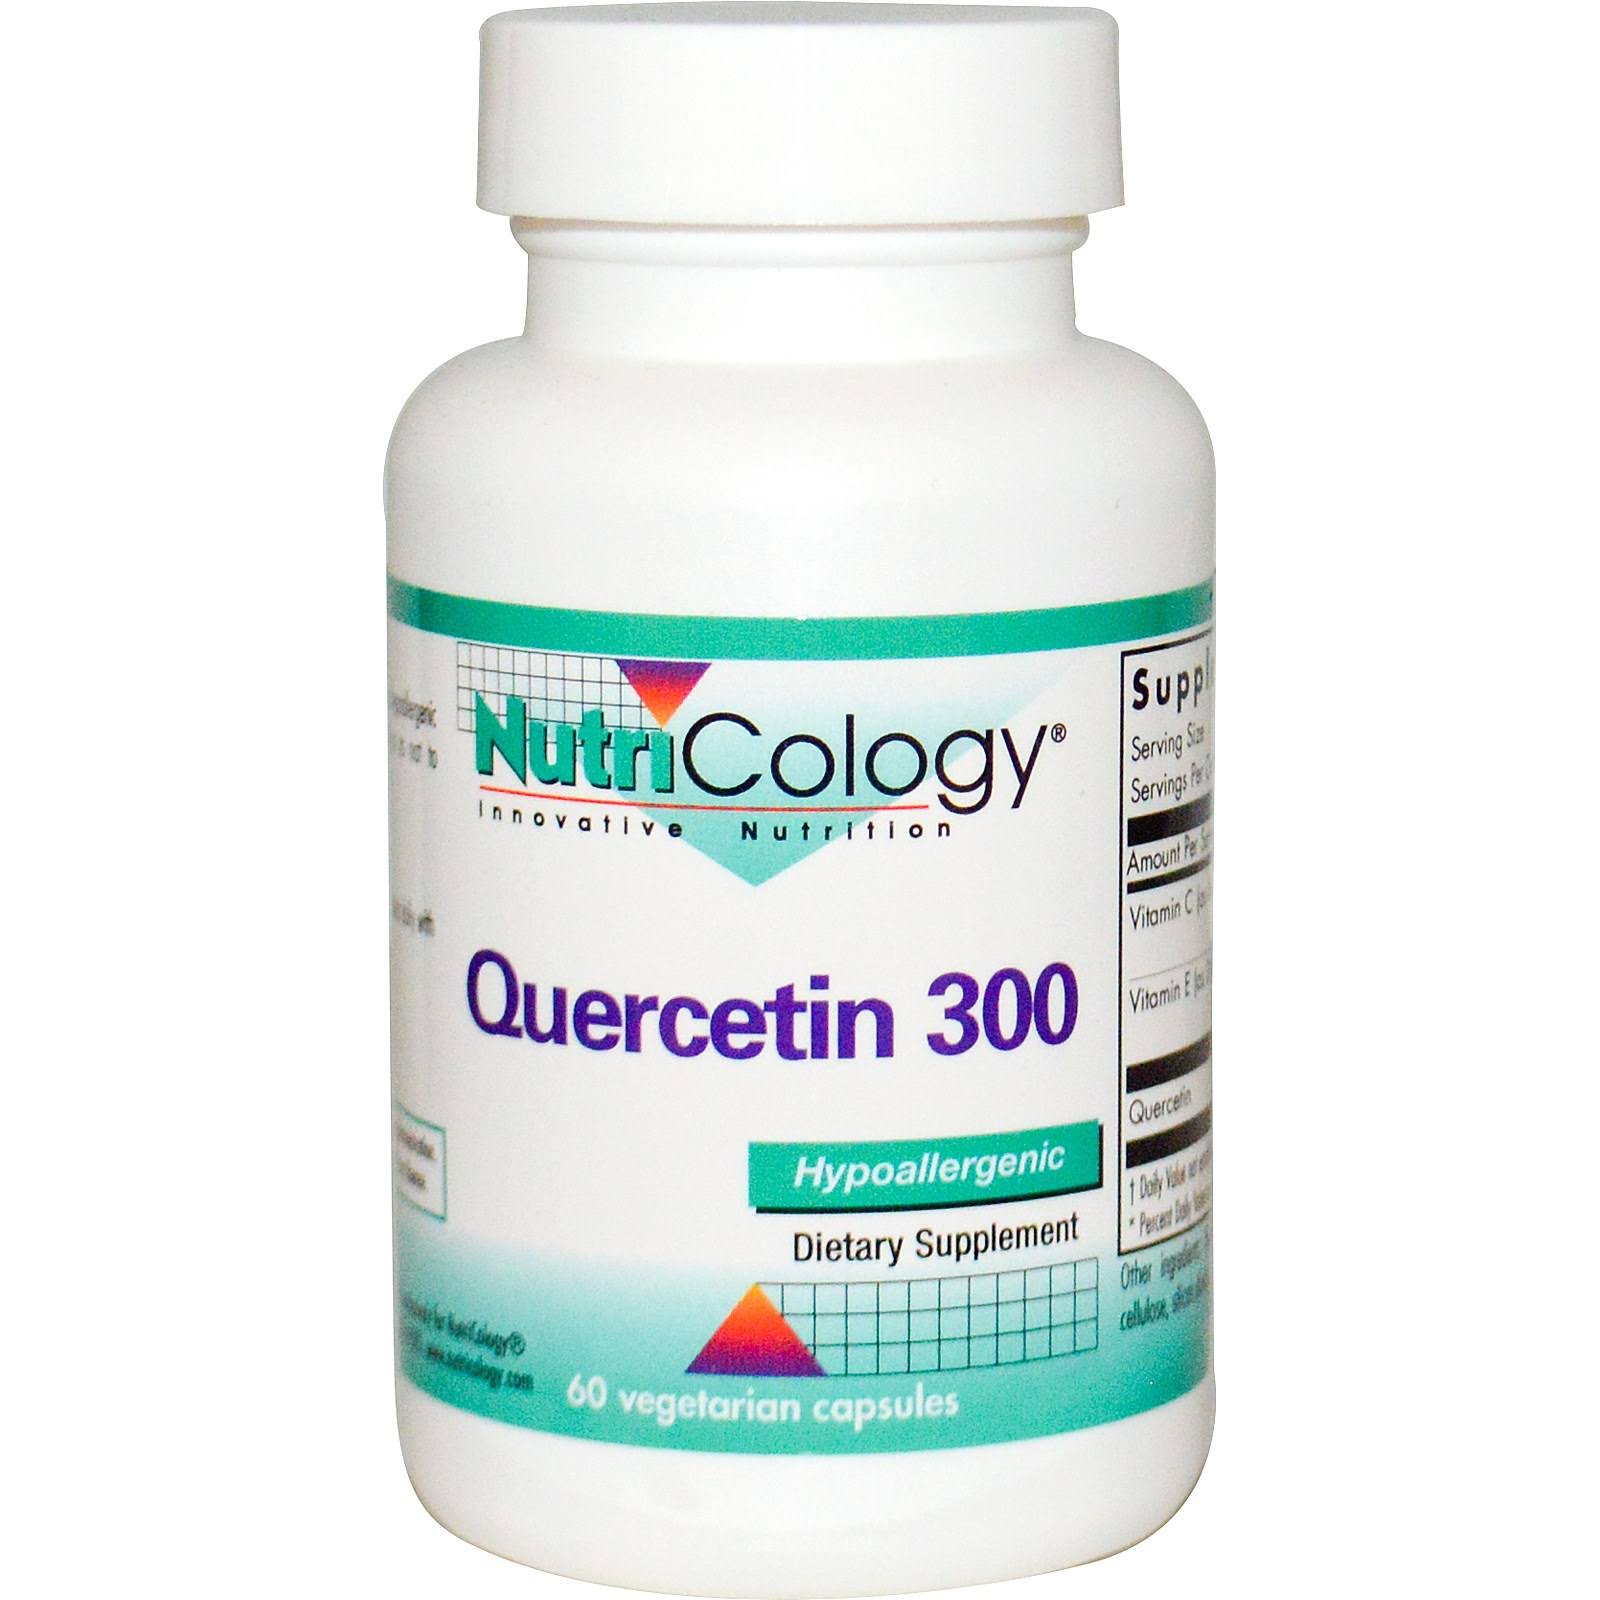 Nutricology Quercetin 300 Supplement - 60ct